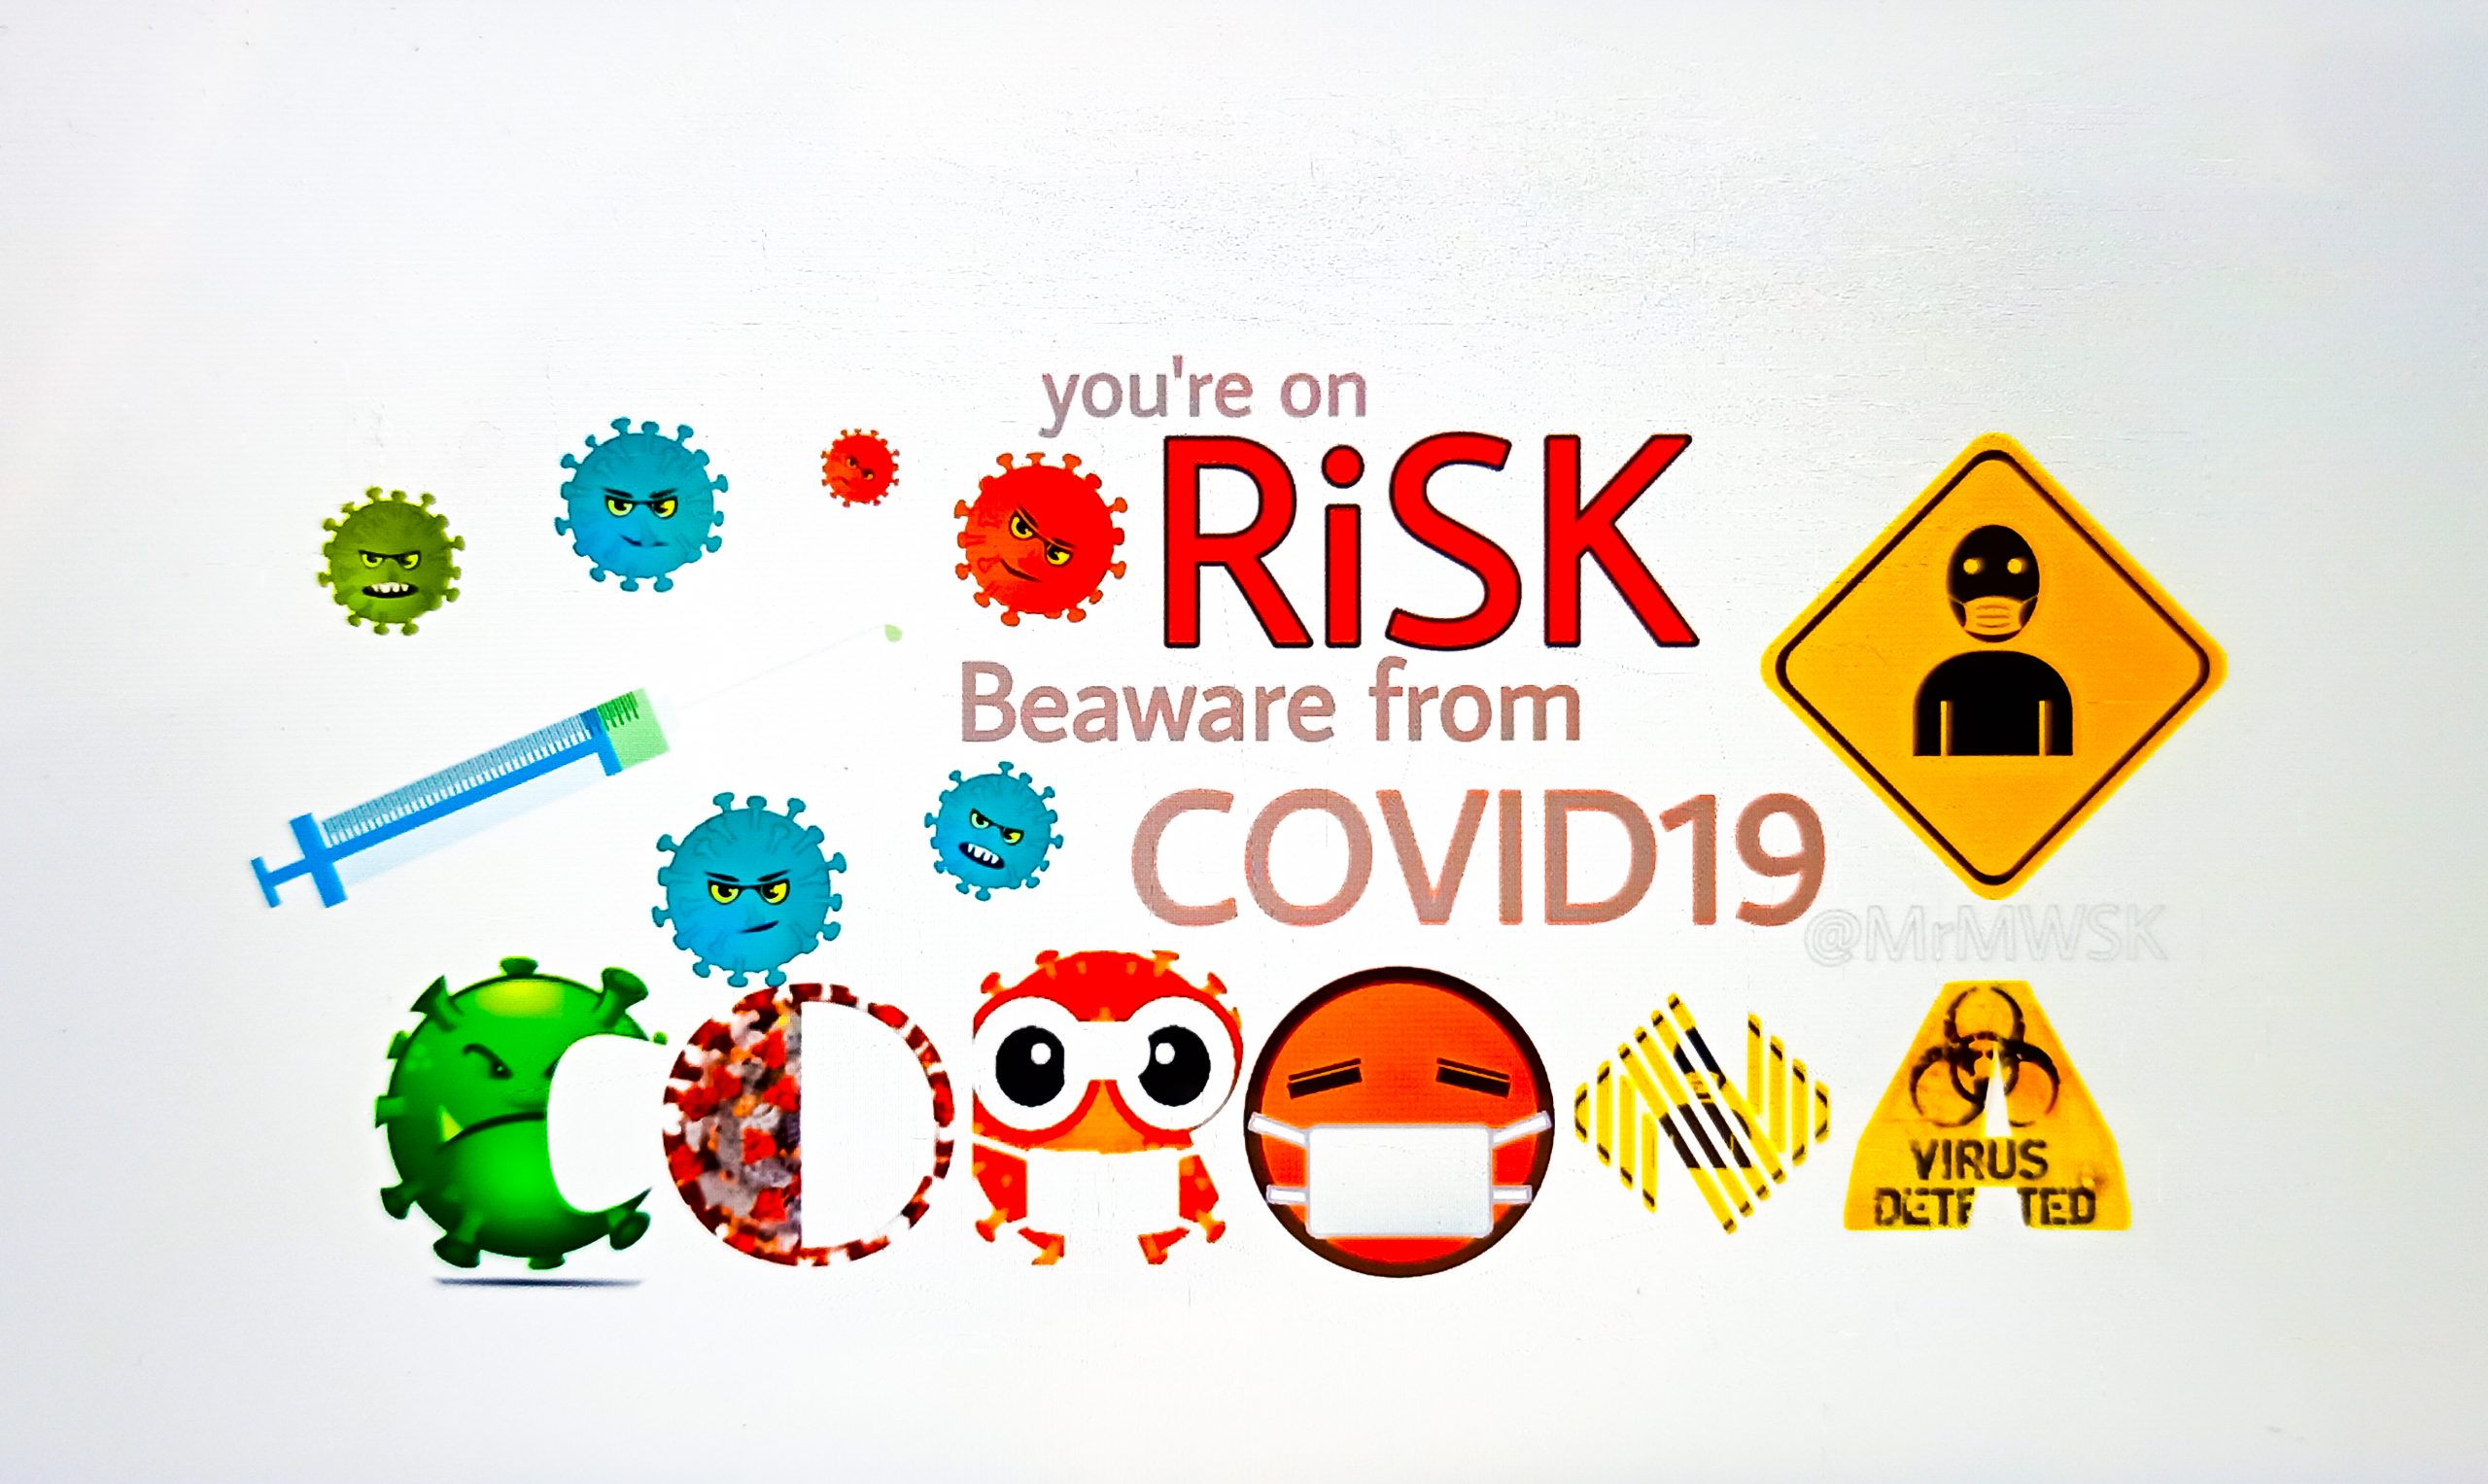 Covid-19 pandemic illustration